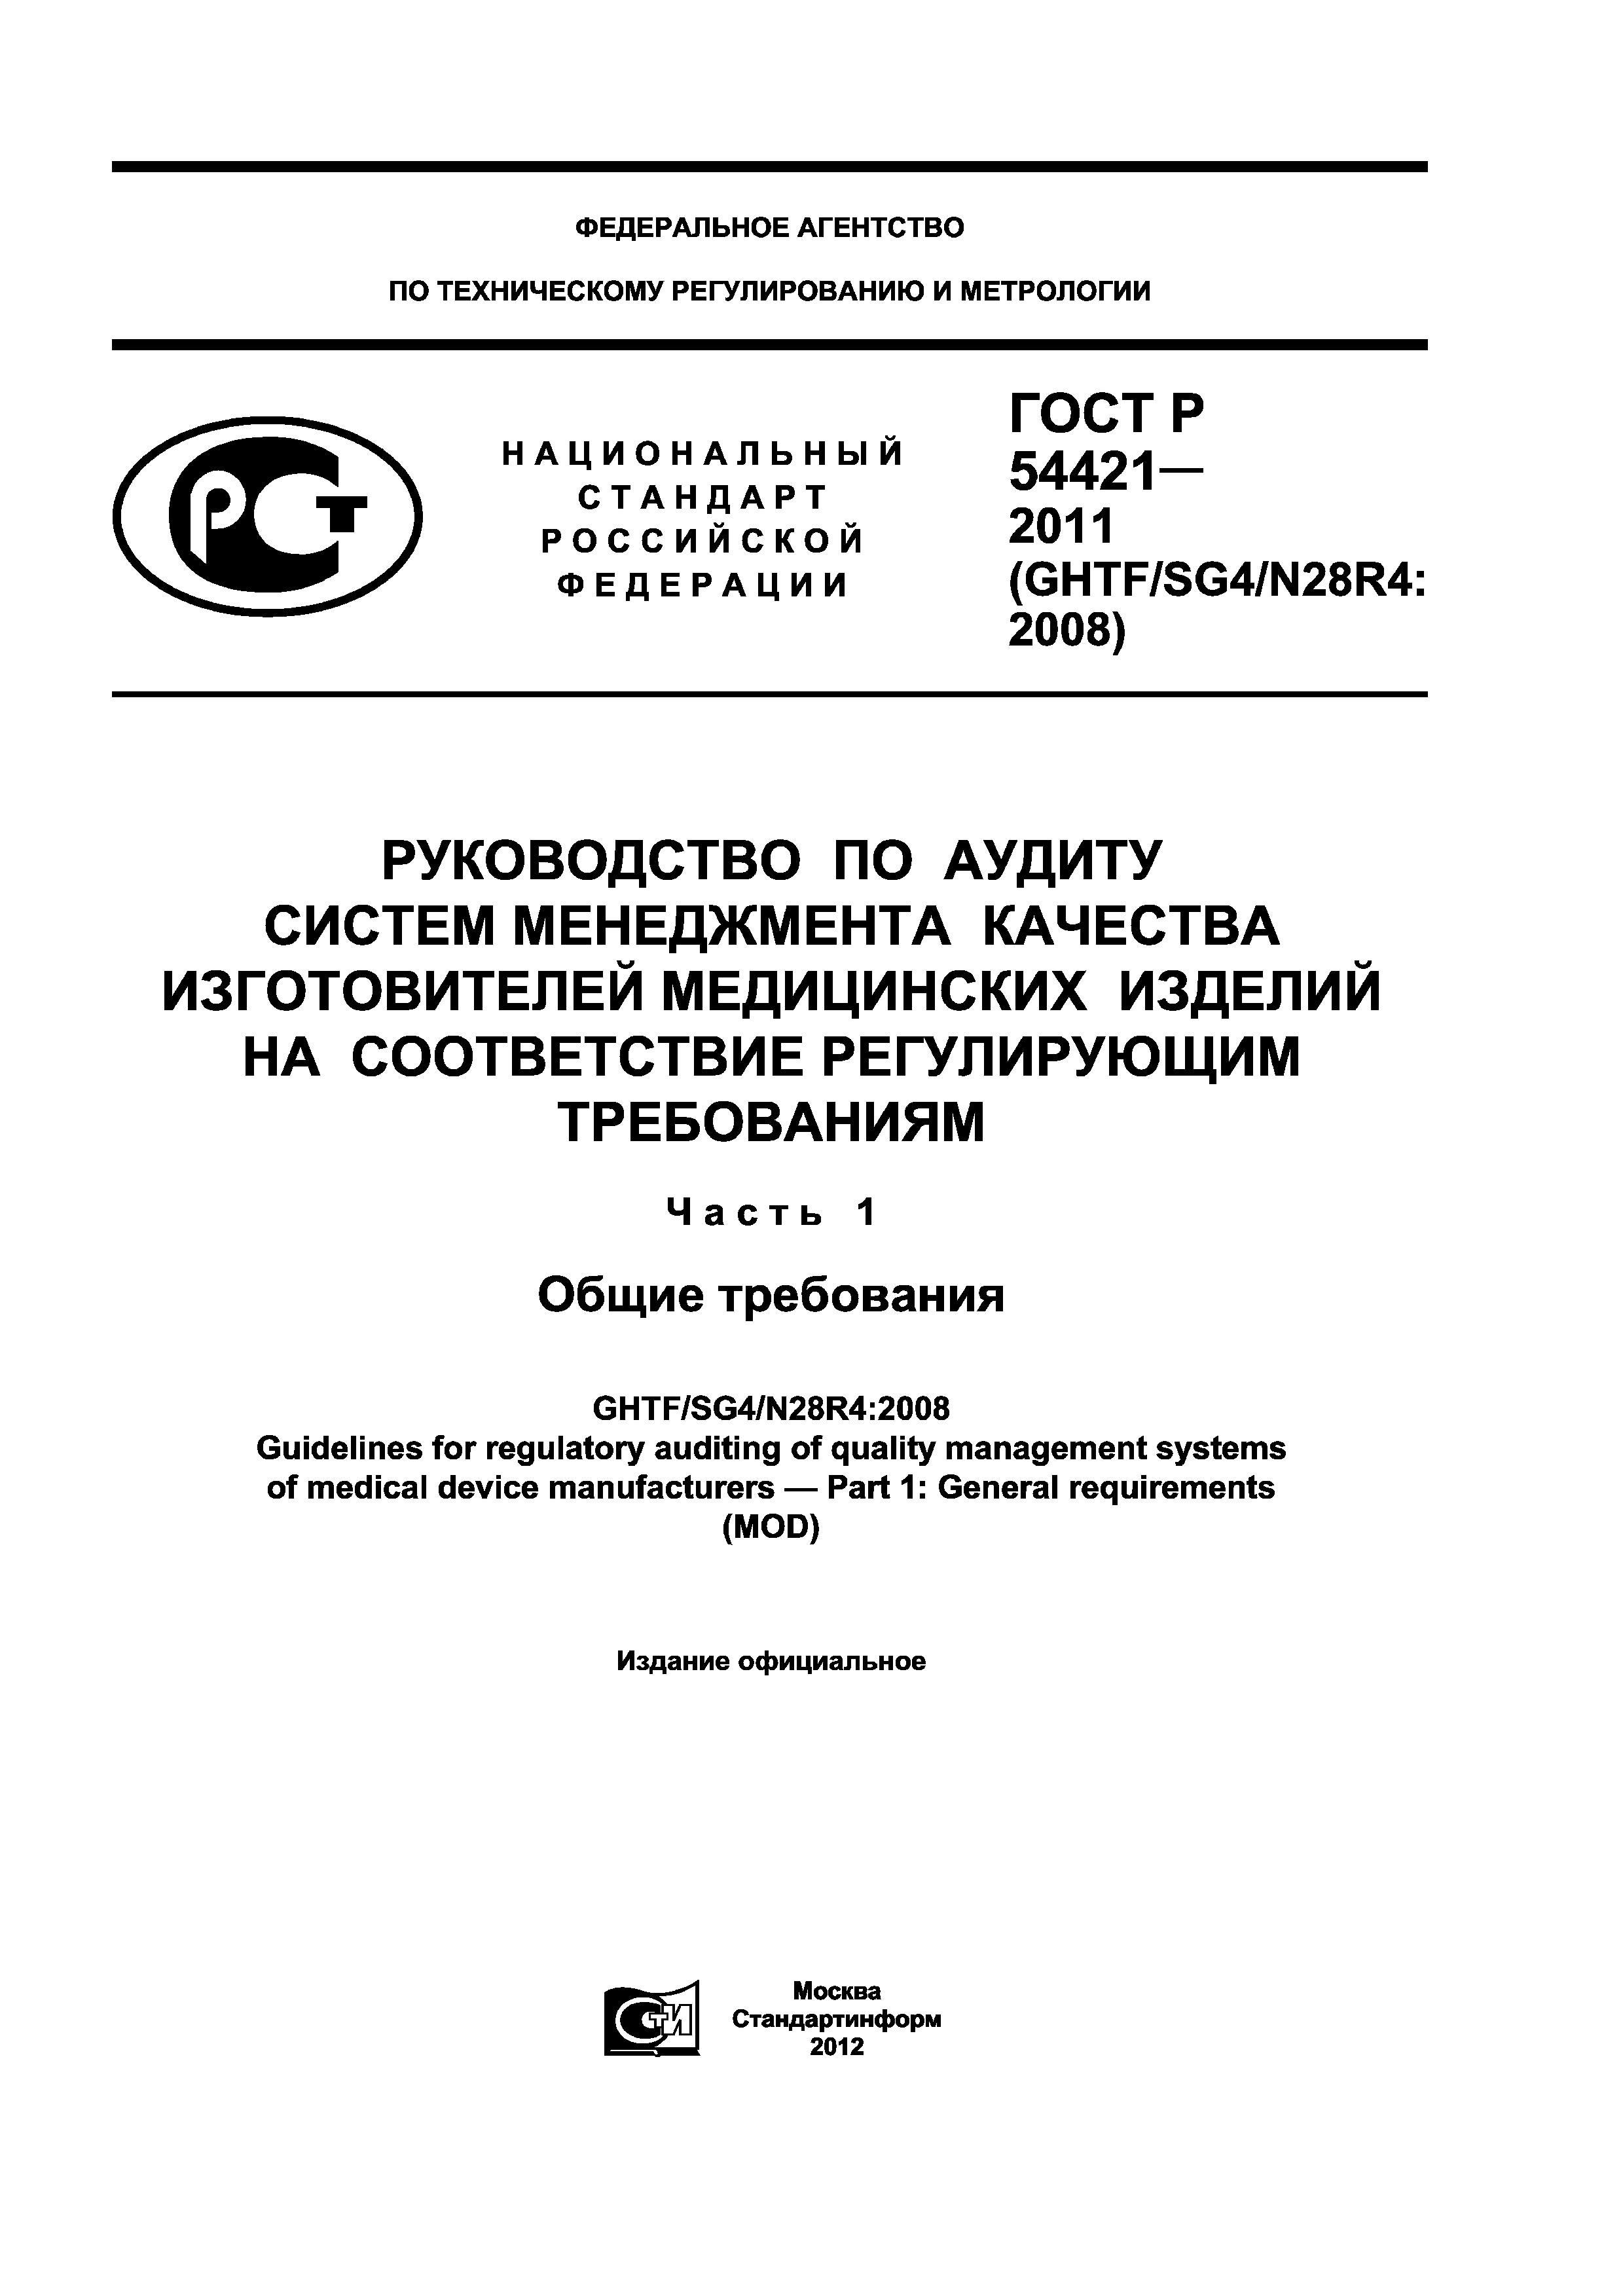 ГОСТ Р 54421-2011